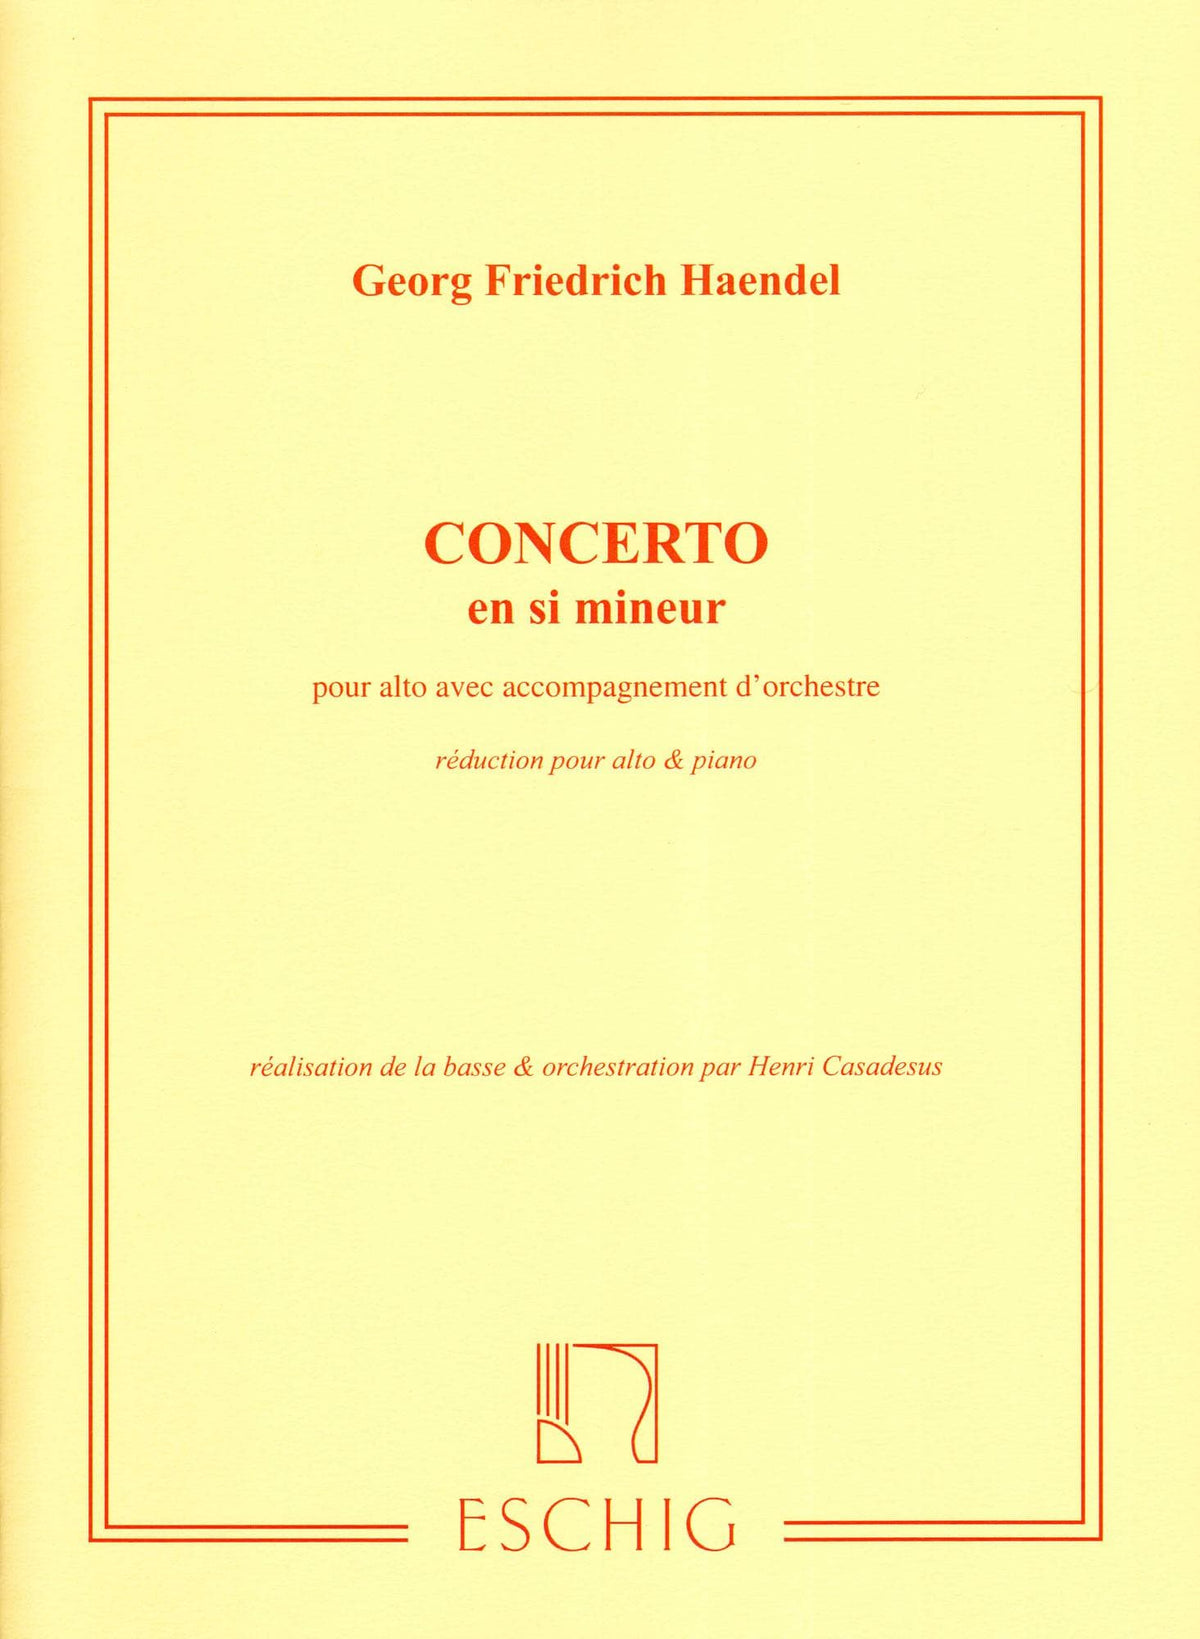 Handel, George Frideric - Concerto in B minor - Viola and Piano - edited by Henri Casadesus - Editions Durand